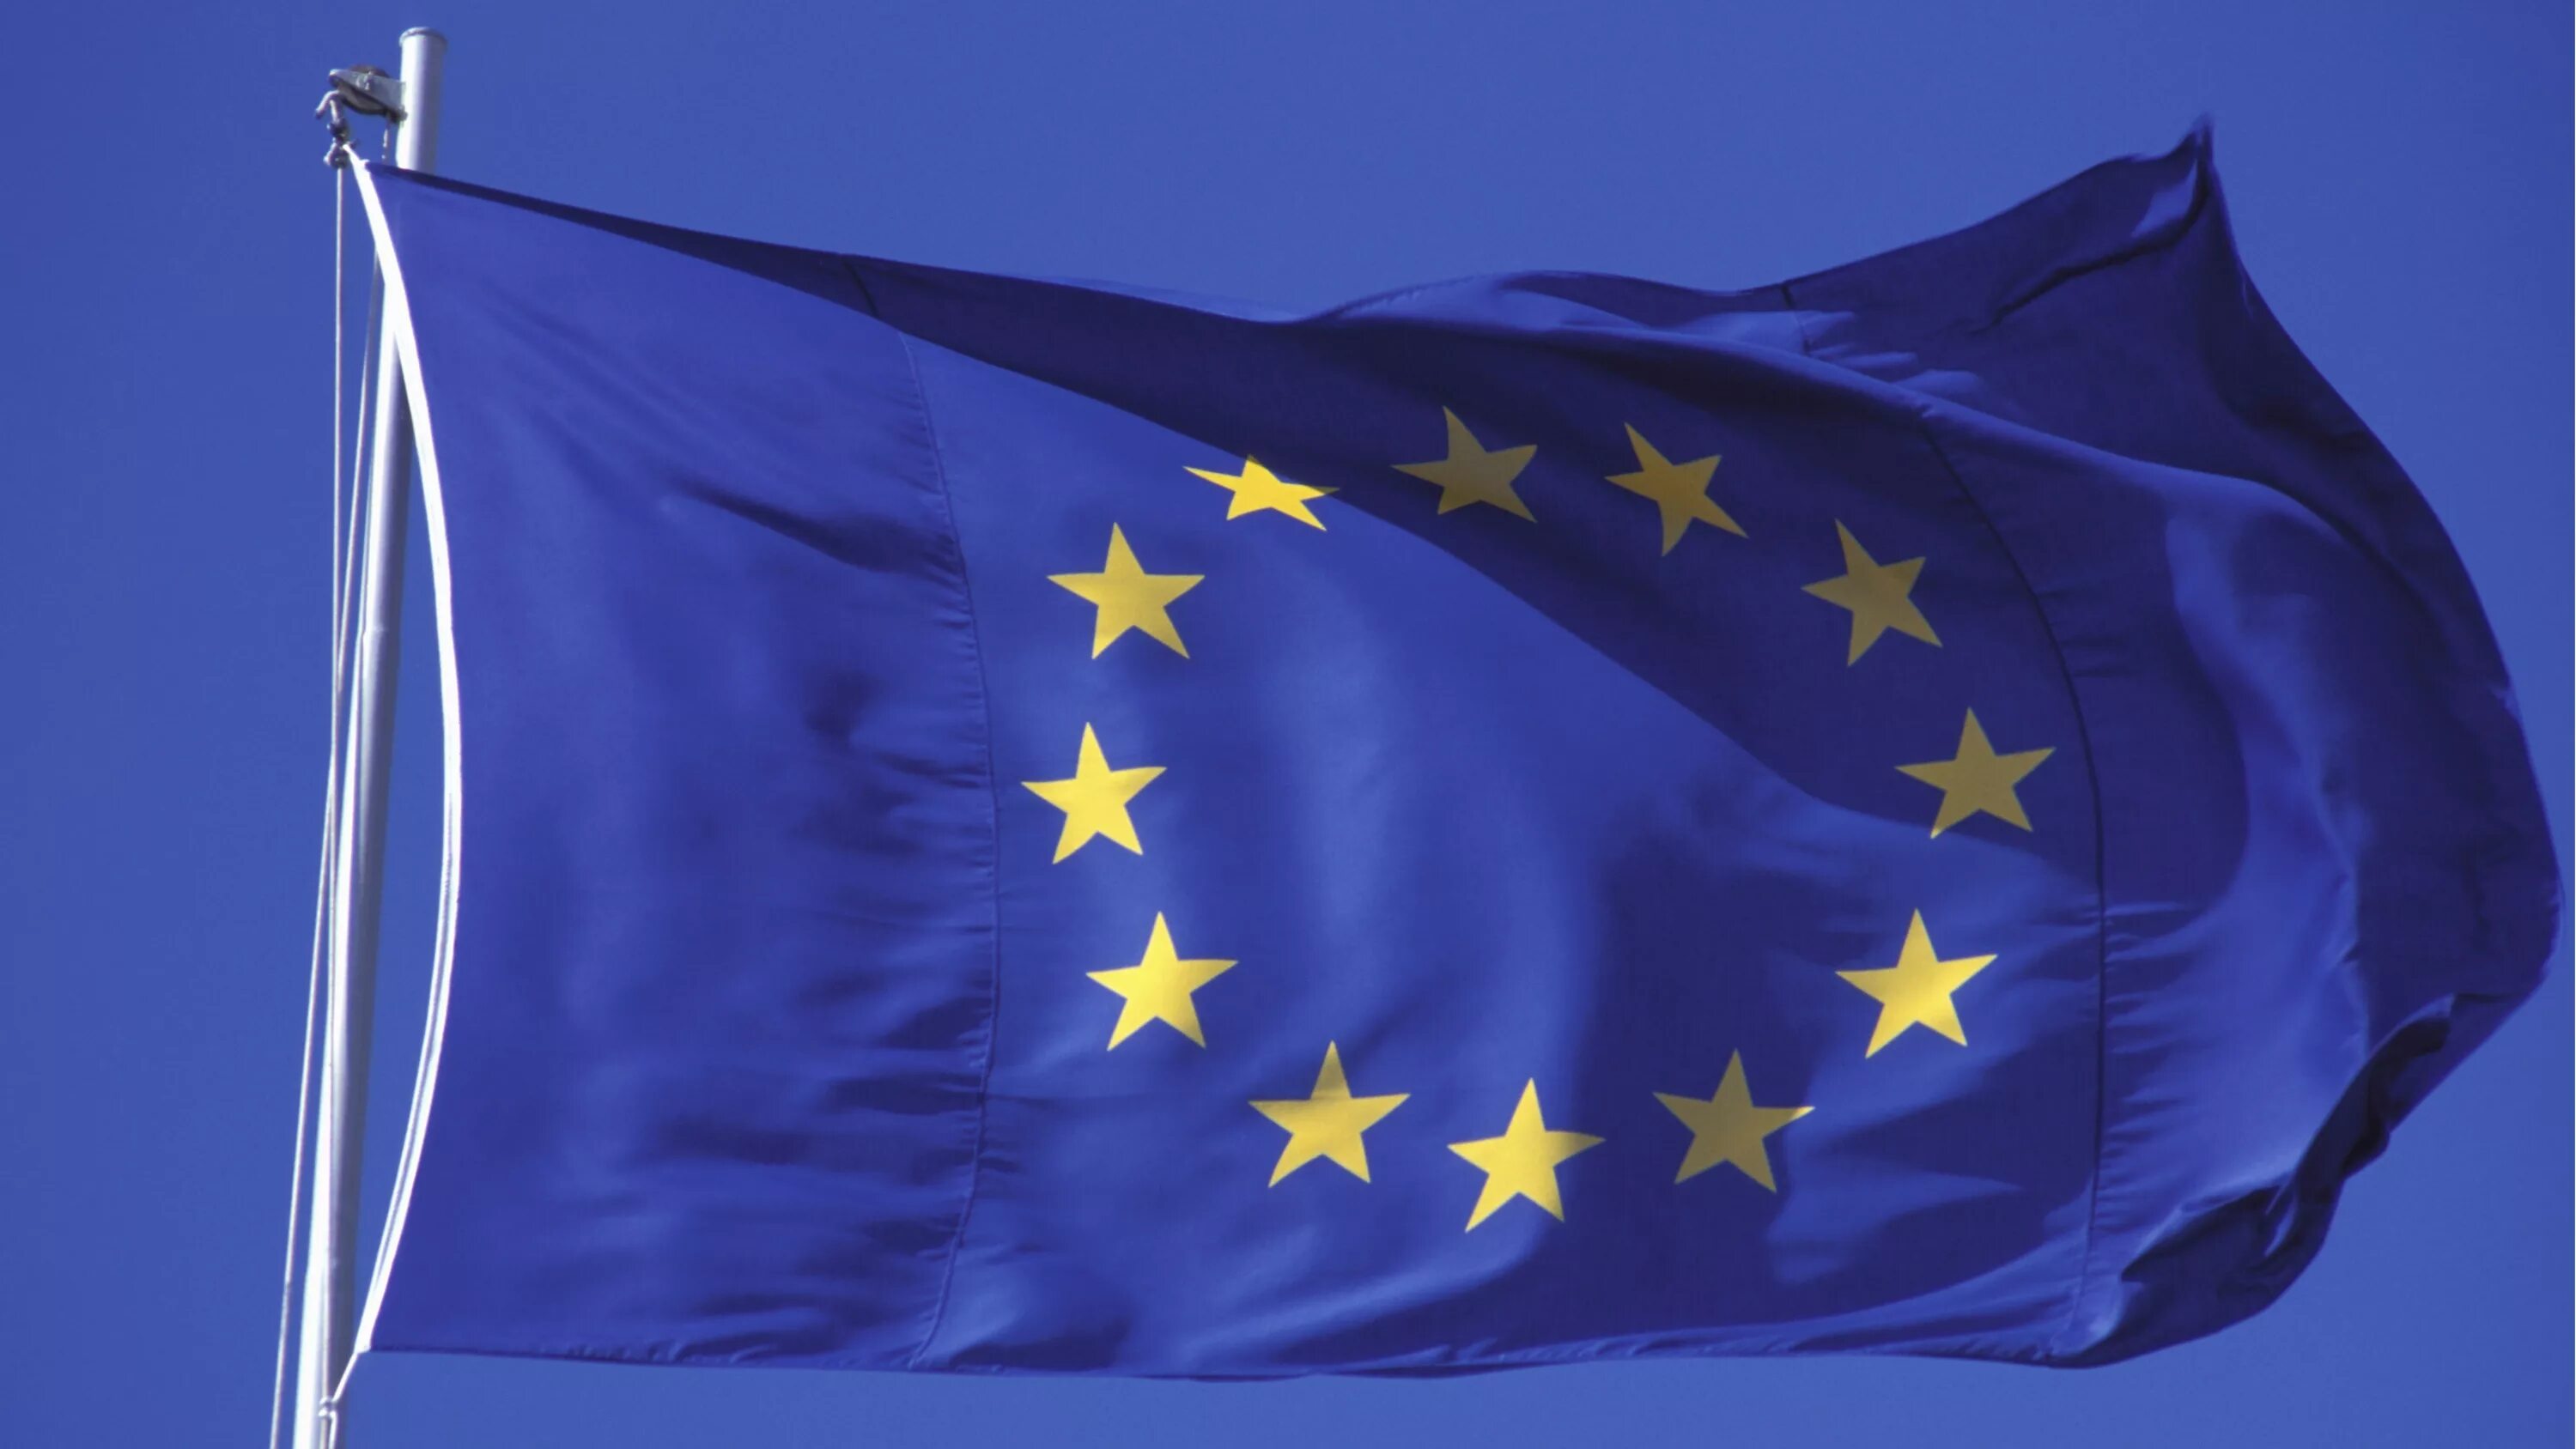 Армения вступит в ес. Флаг ЕС И Туркменистан. Евросоюза Ляйн. Франция и Евросоюз. Развивающийся флаг ЕС.